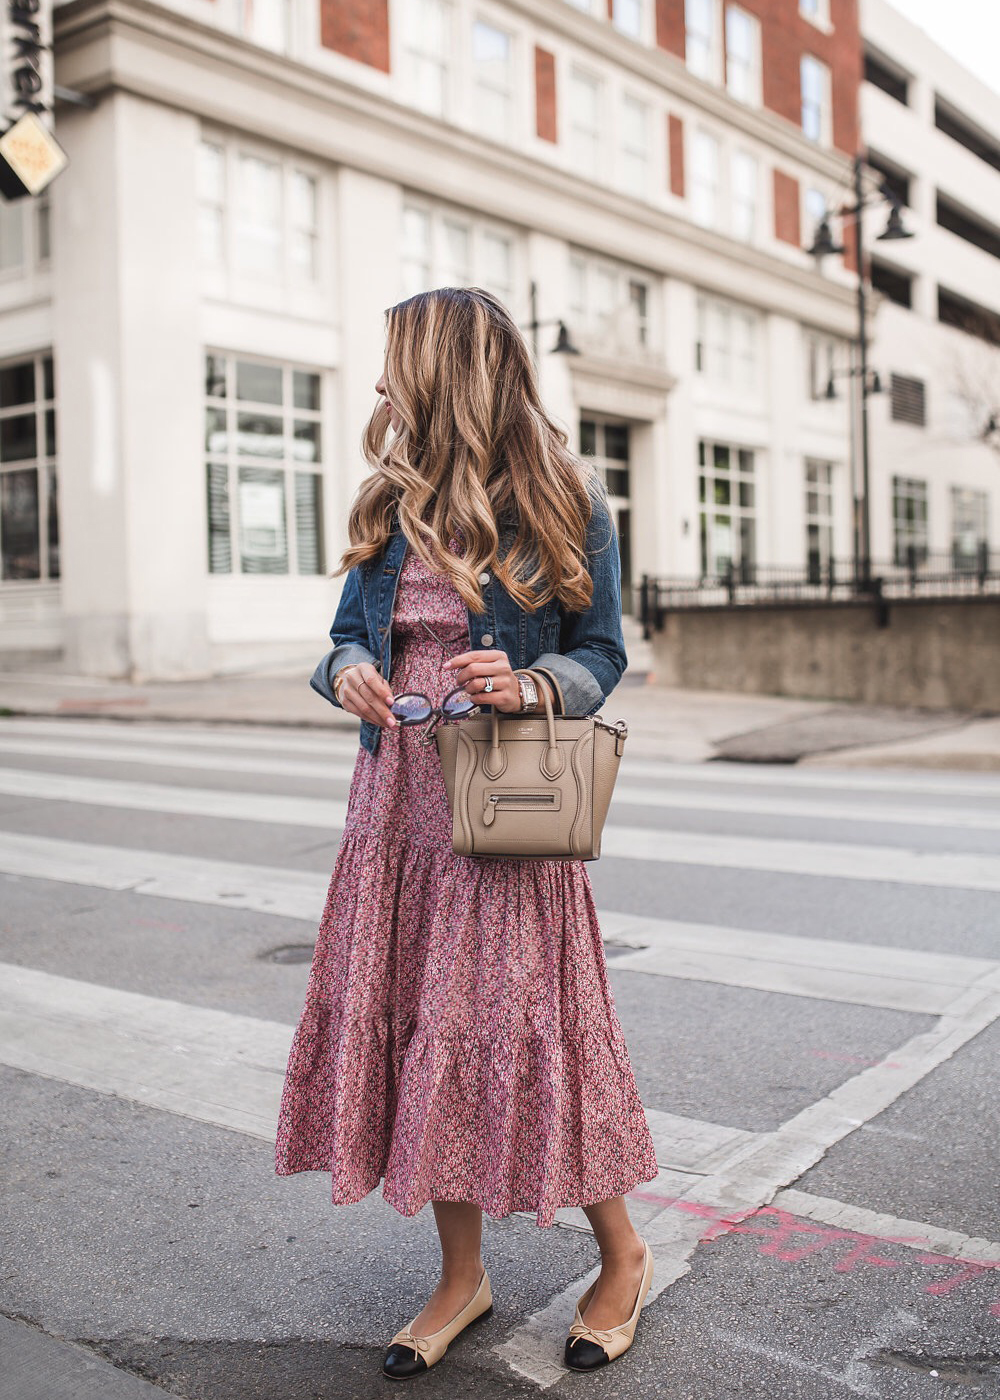 A Spring Dress + Denim Jacket | The Teacher Diva: a Dallas Fashion Blog ...